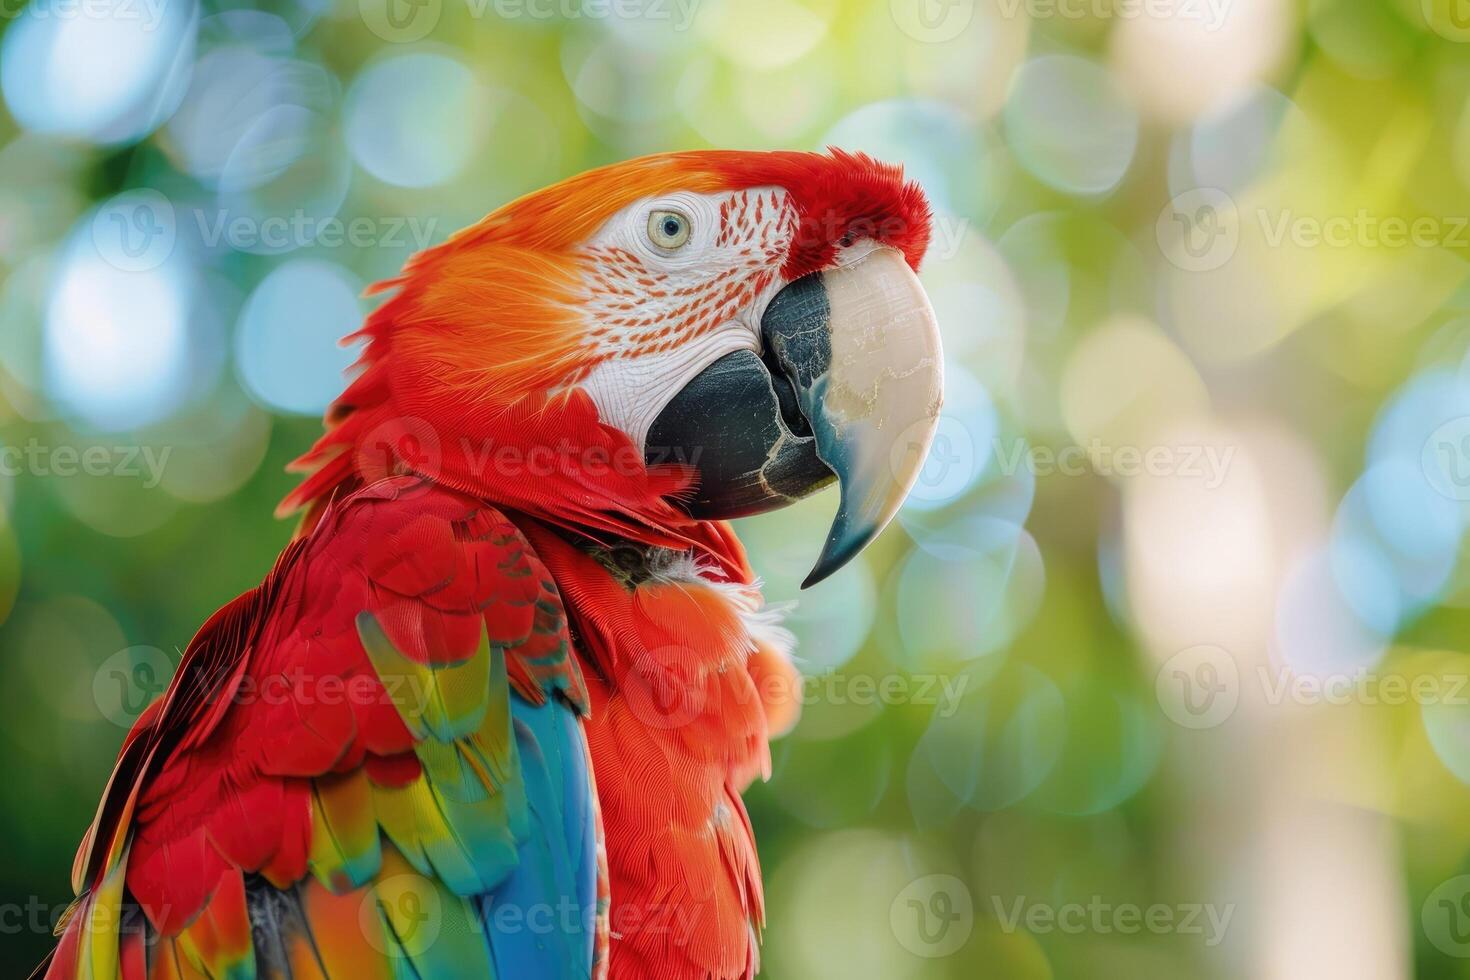 ai gerado colorida escarlate arara papagaio dentro selva. foto